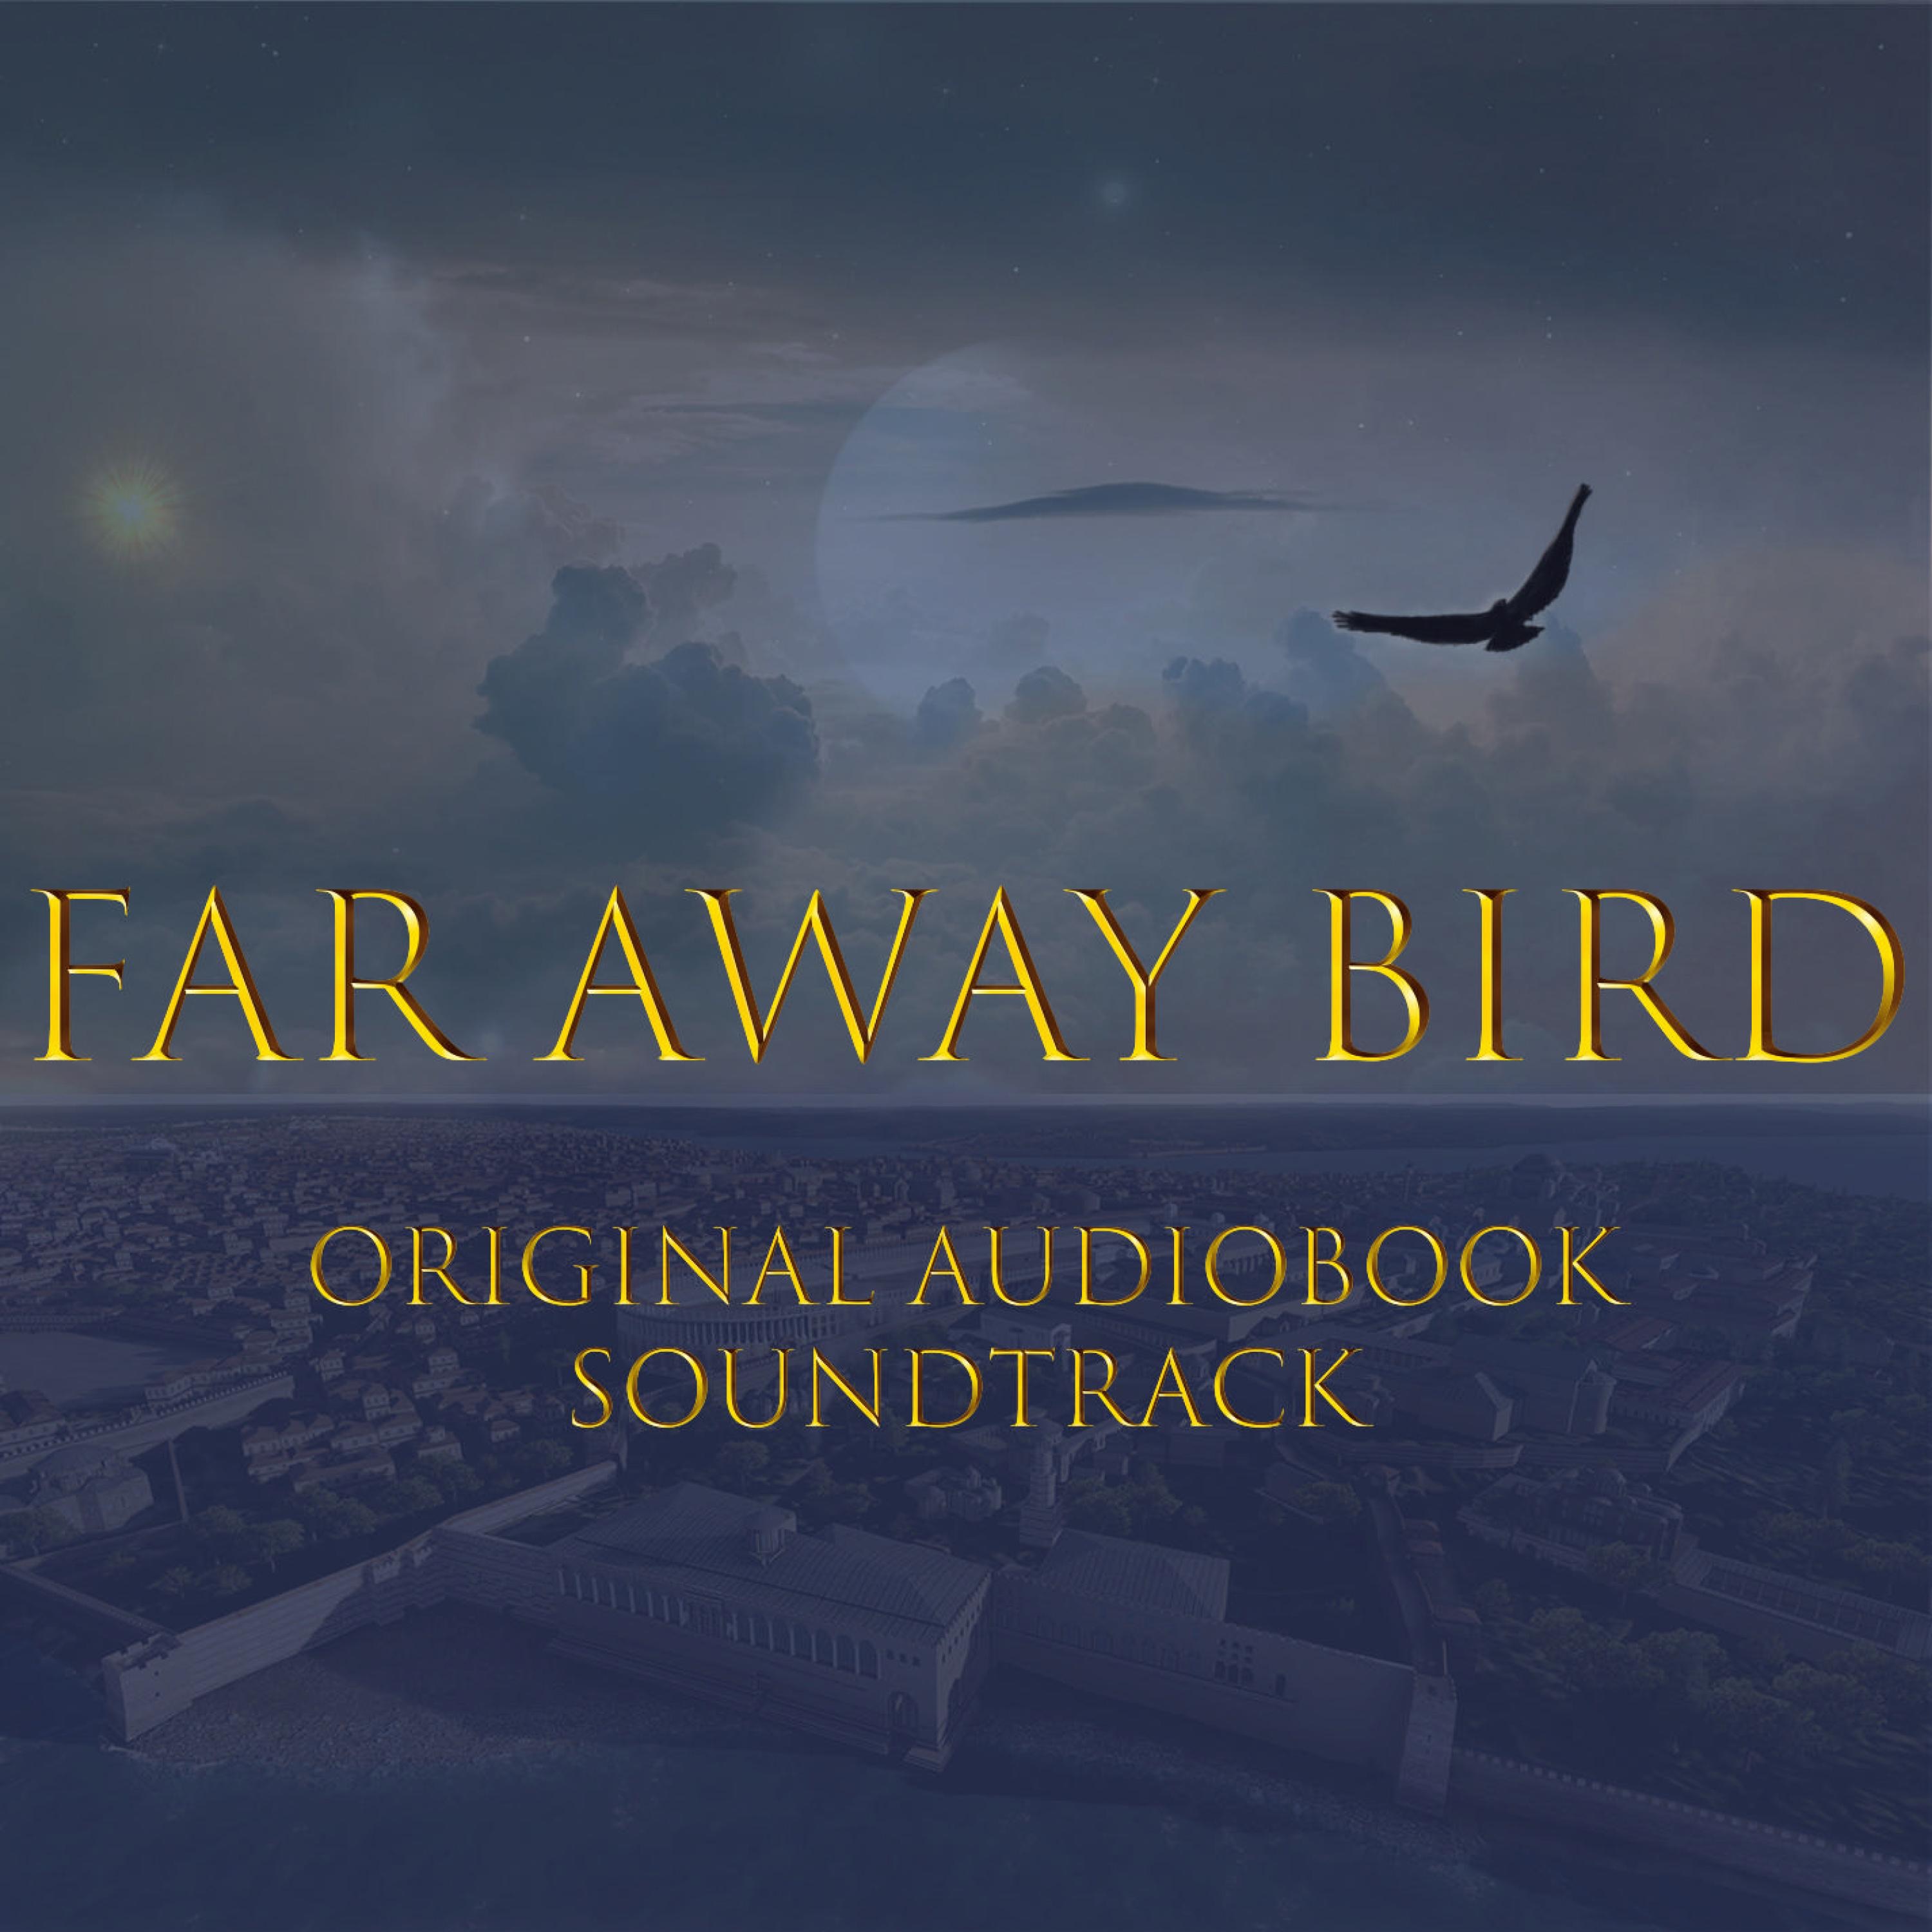 Ost bird. The Birds Soundtrack. Fly away Low Birdy....far away откуда из какой игры. Will Nott-Hide you far away (OST Decoy Bride).